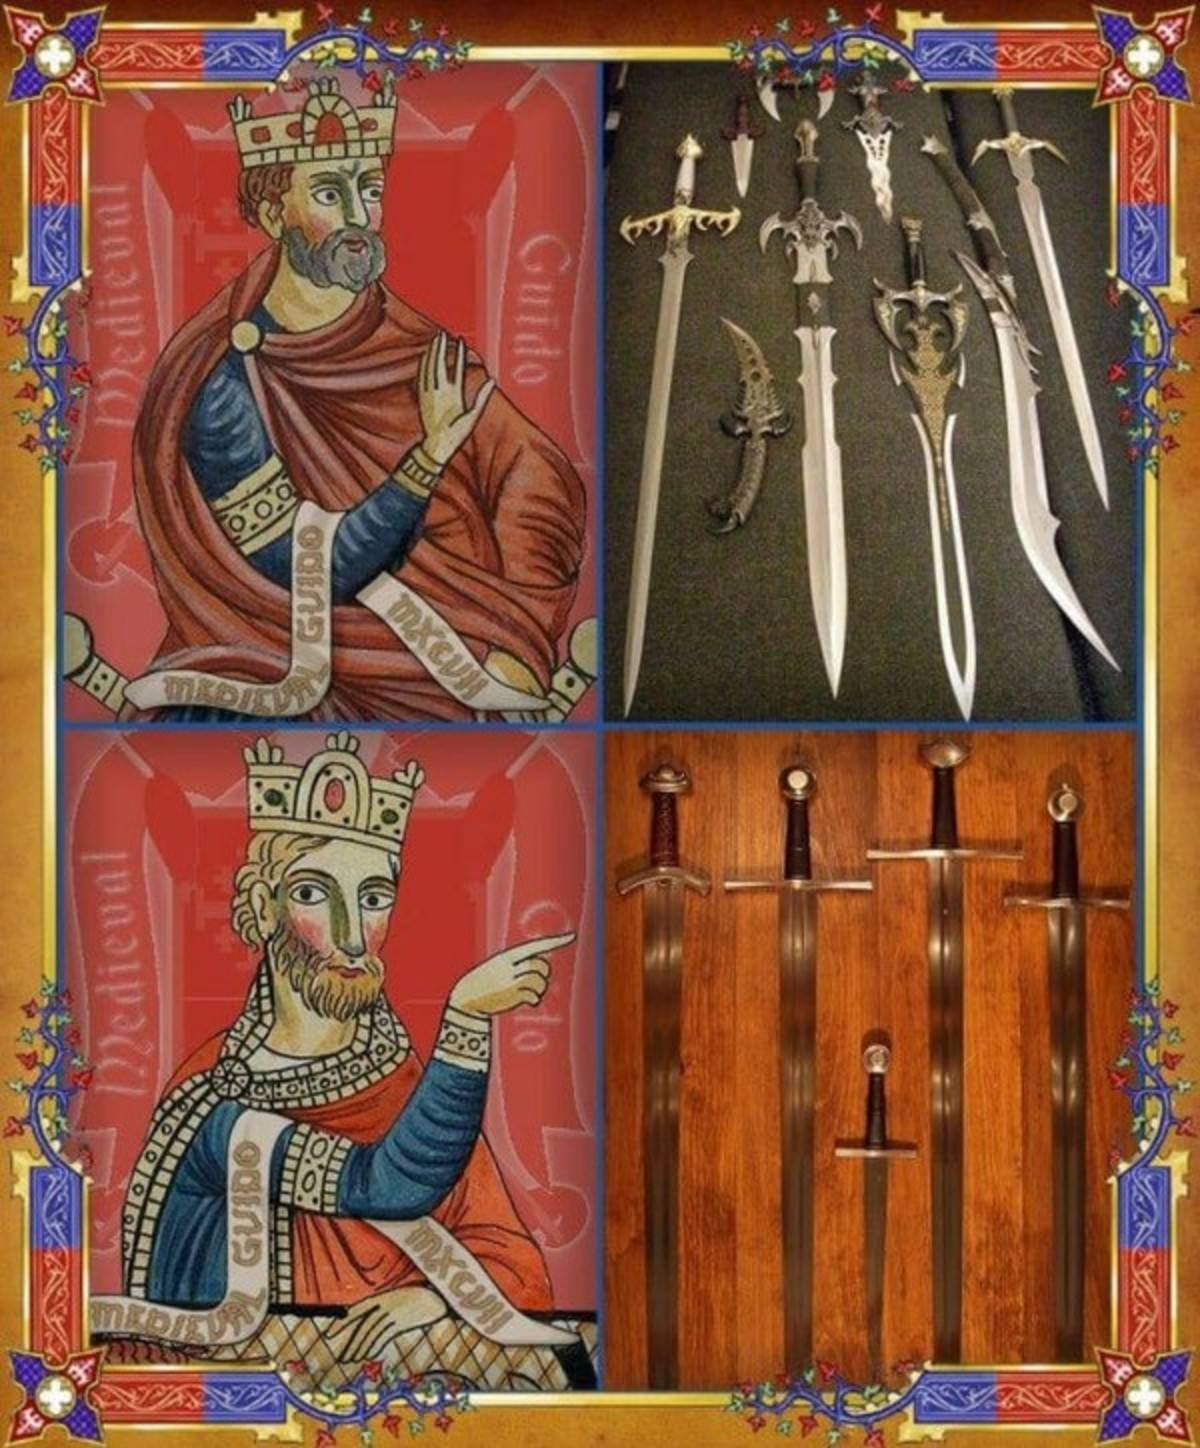 fantasy arming sword - Medieval Hbsrb Doo end Gui Guido Odin